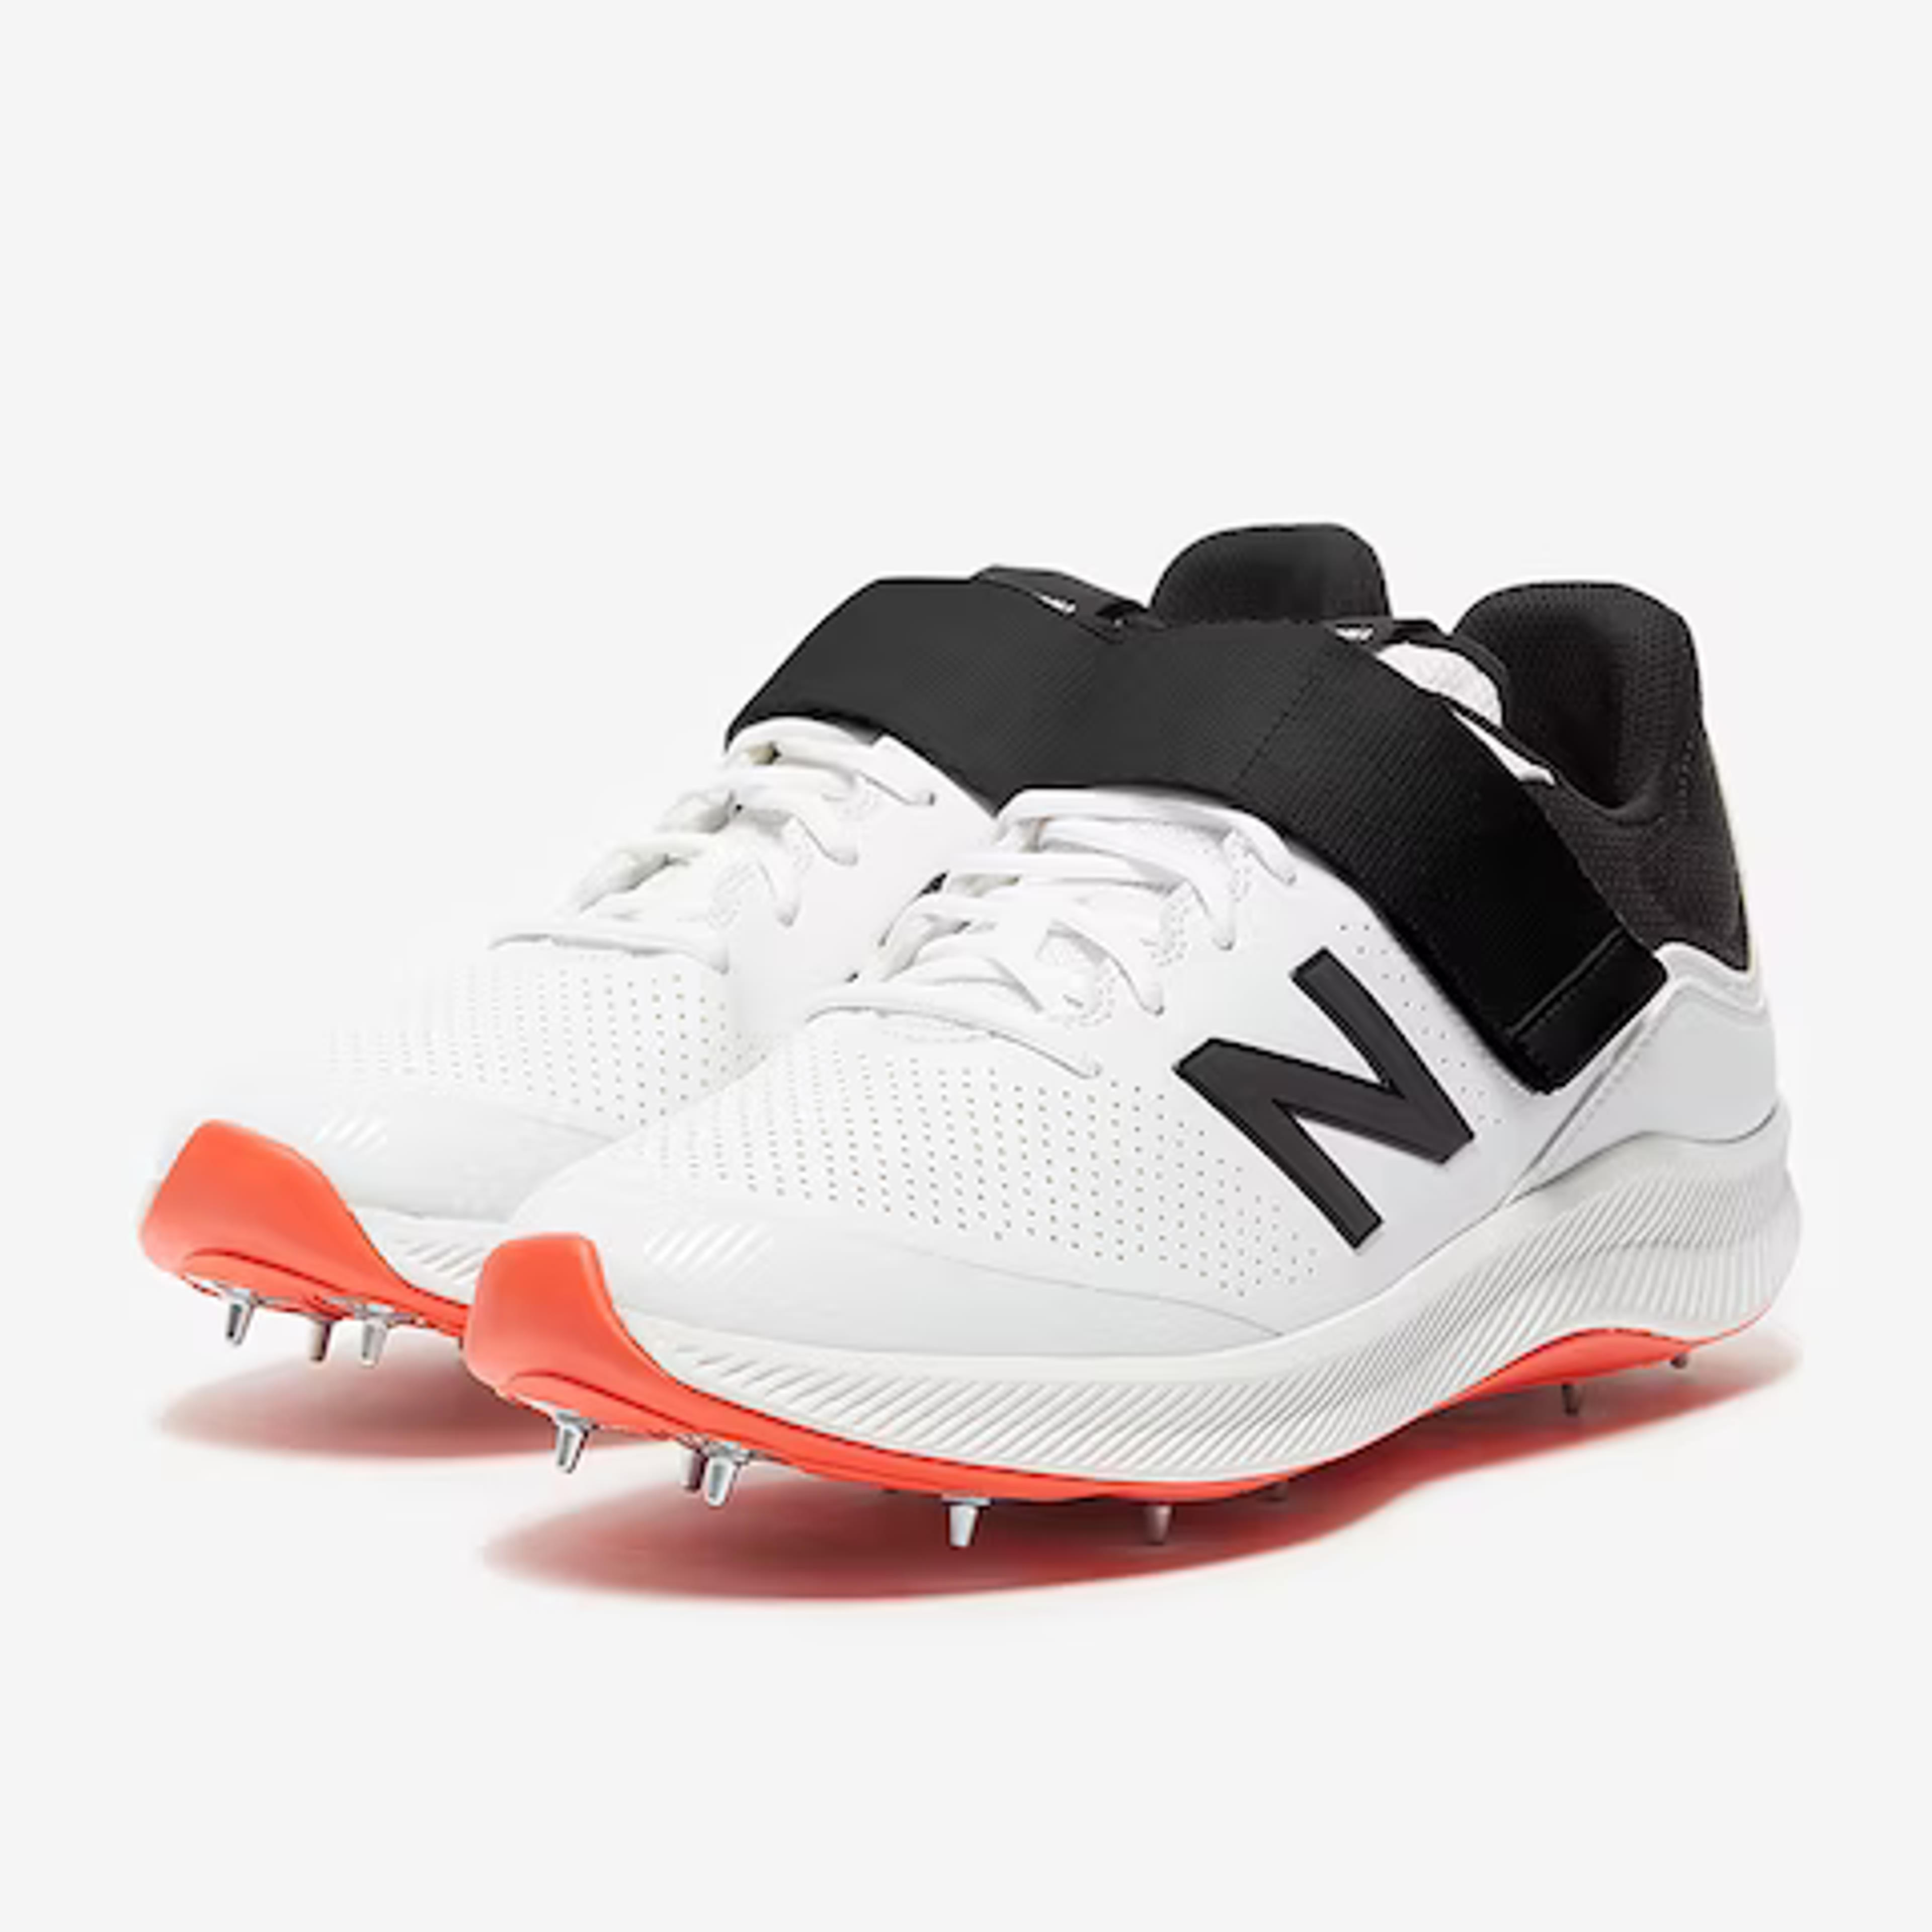 New Balance CK4040 Cricket Shoe - White/Black/Red